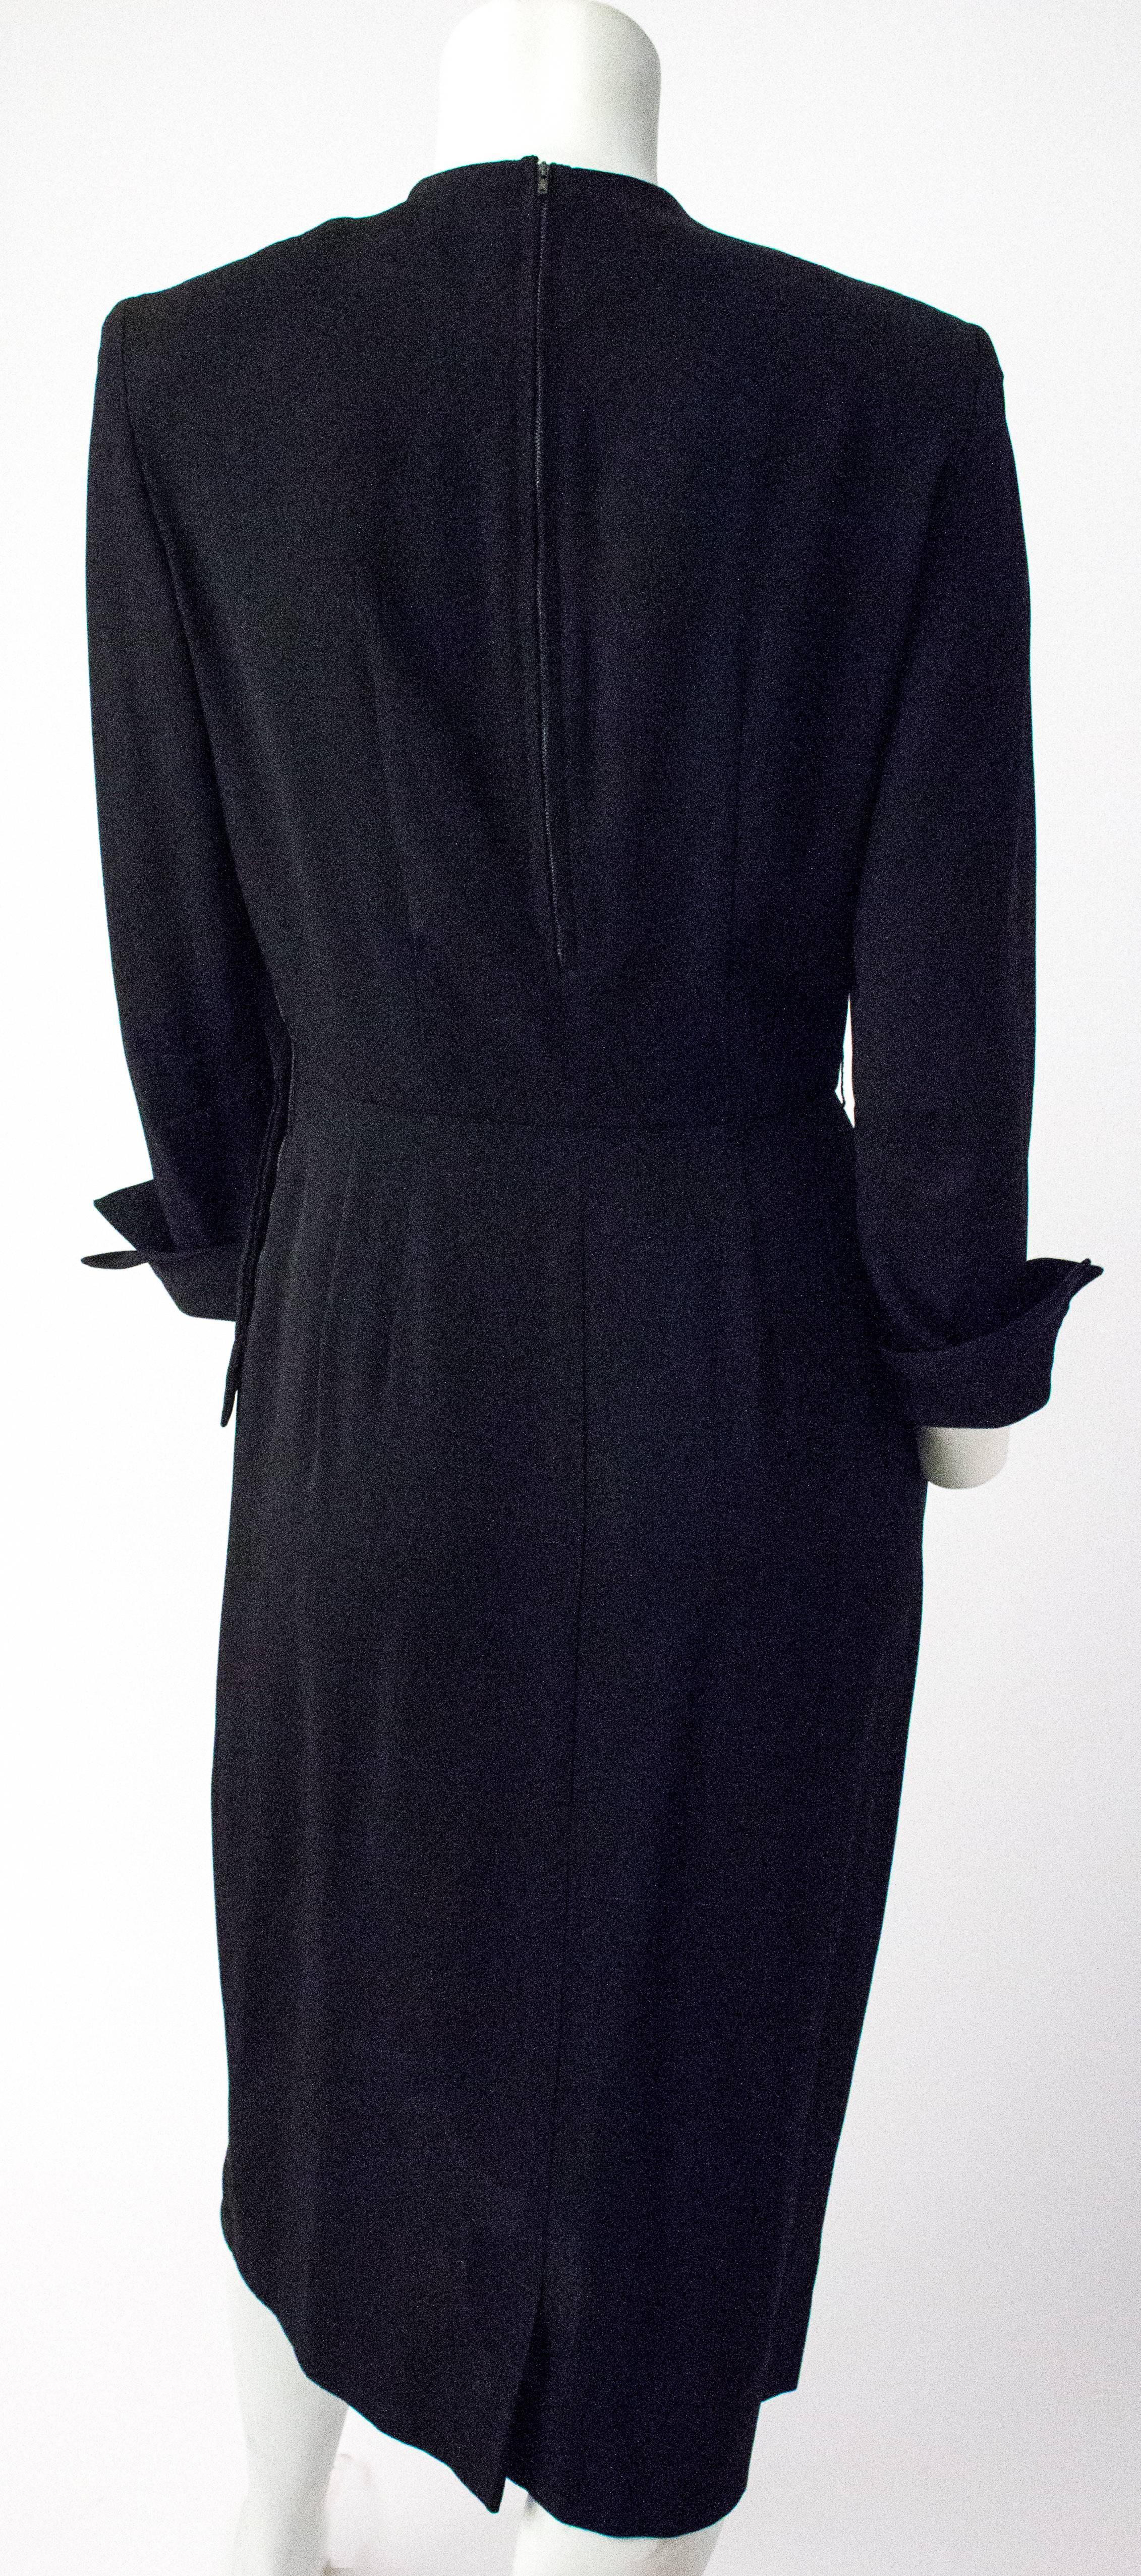 40s Peplum Dress with Velvet Rhinestone Appliqué. Metal zipper up the side. 